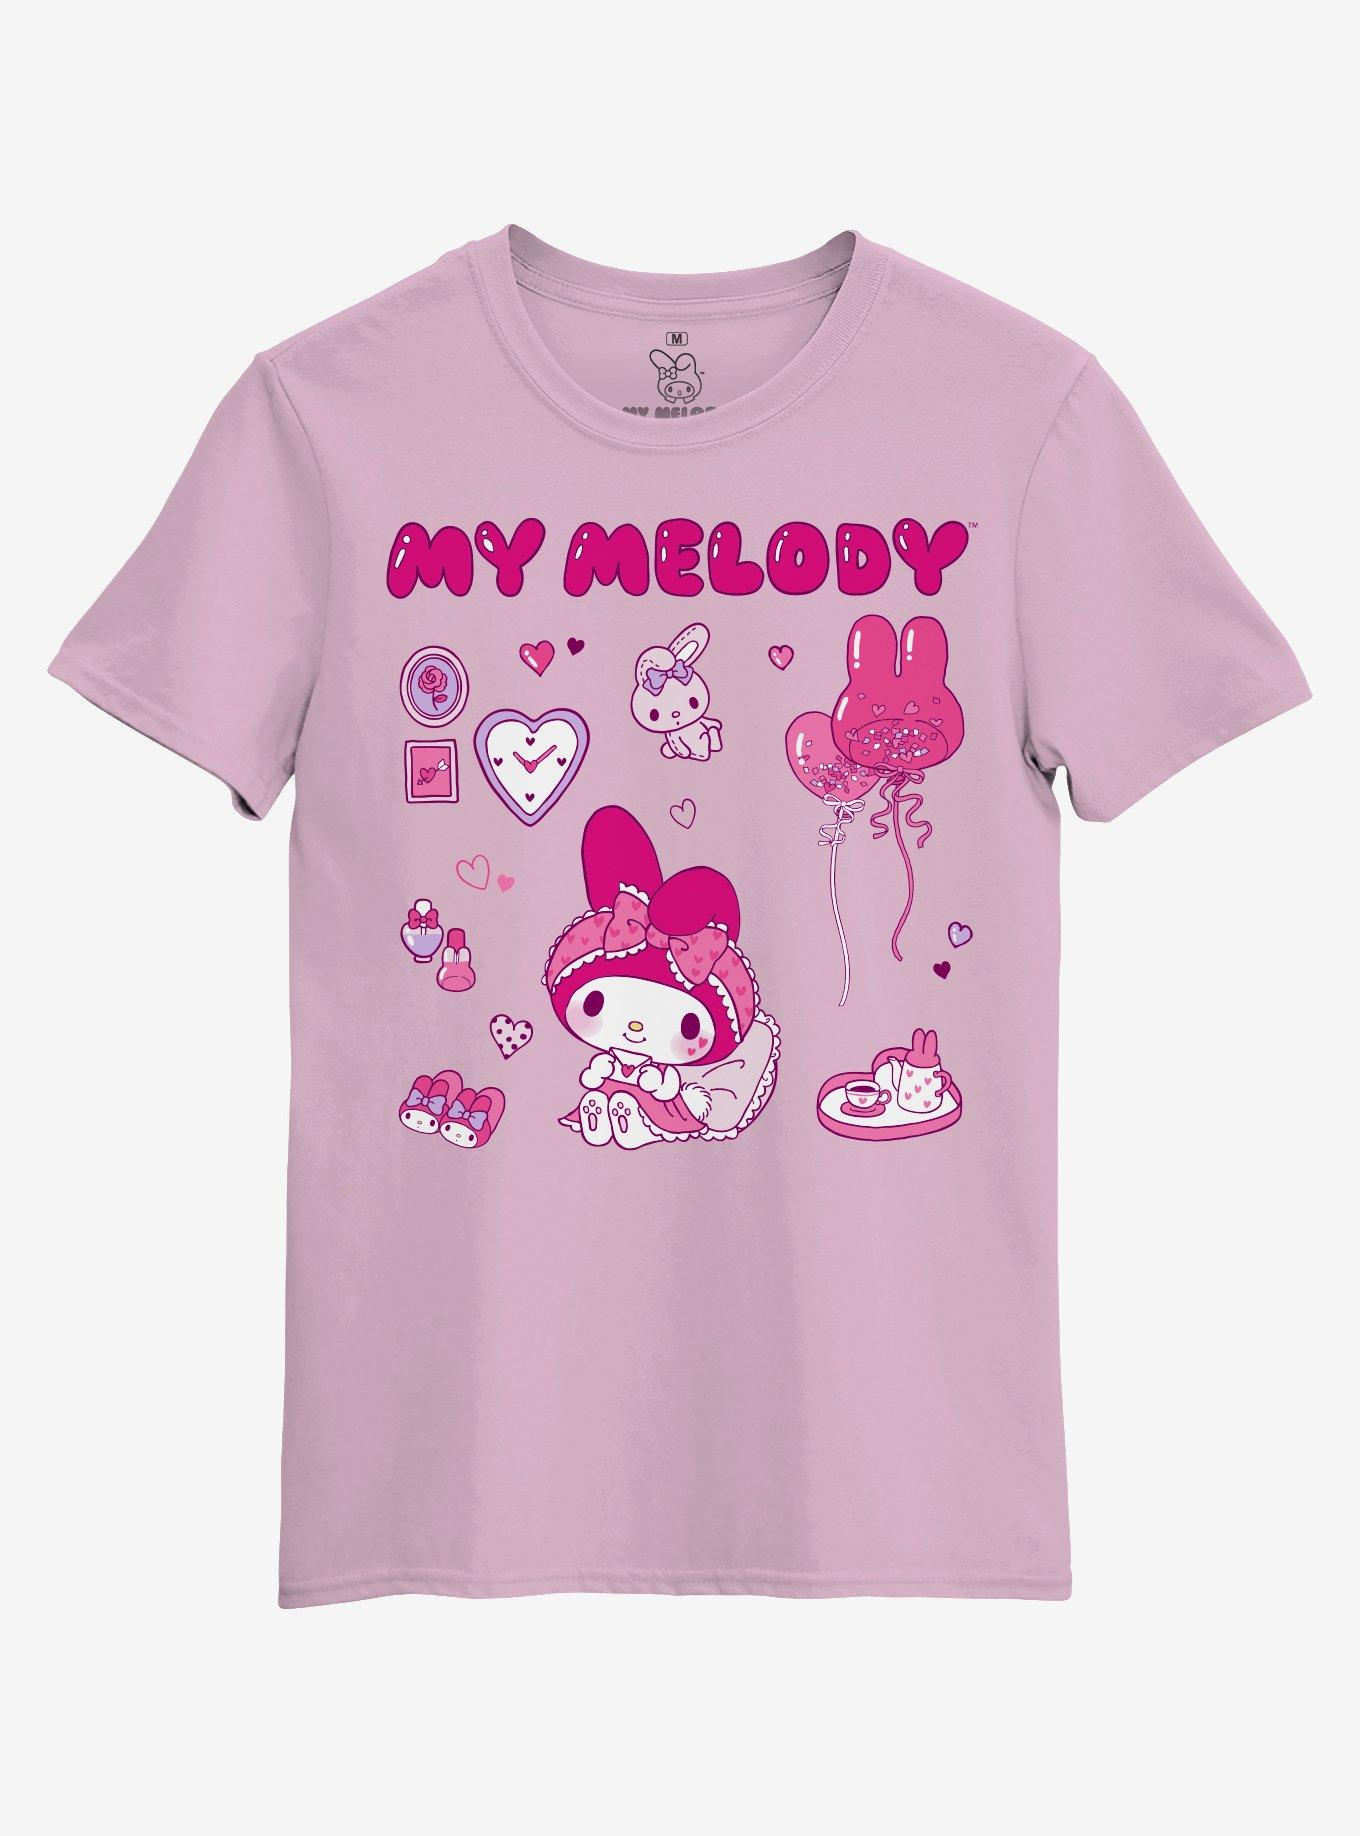 My Melody Sleepover Boyfriend Fit Girls T-Shirt | Hot Topic